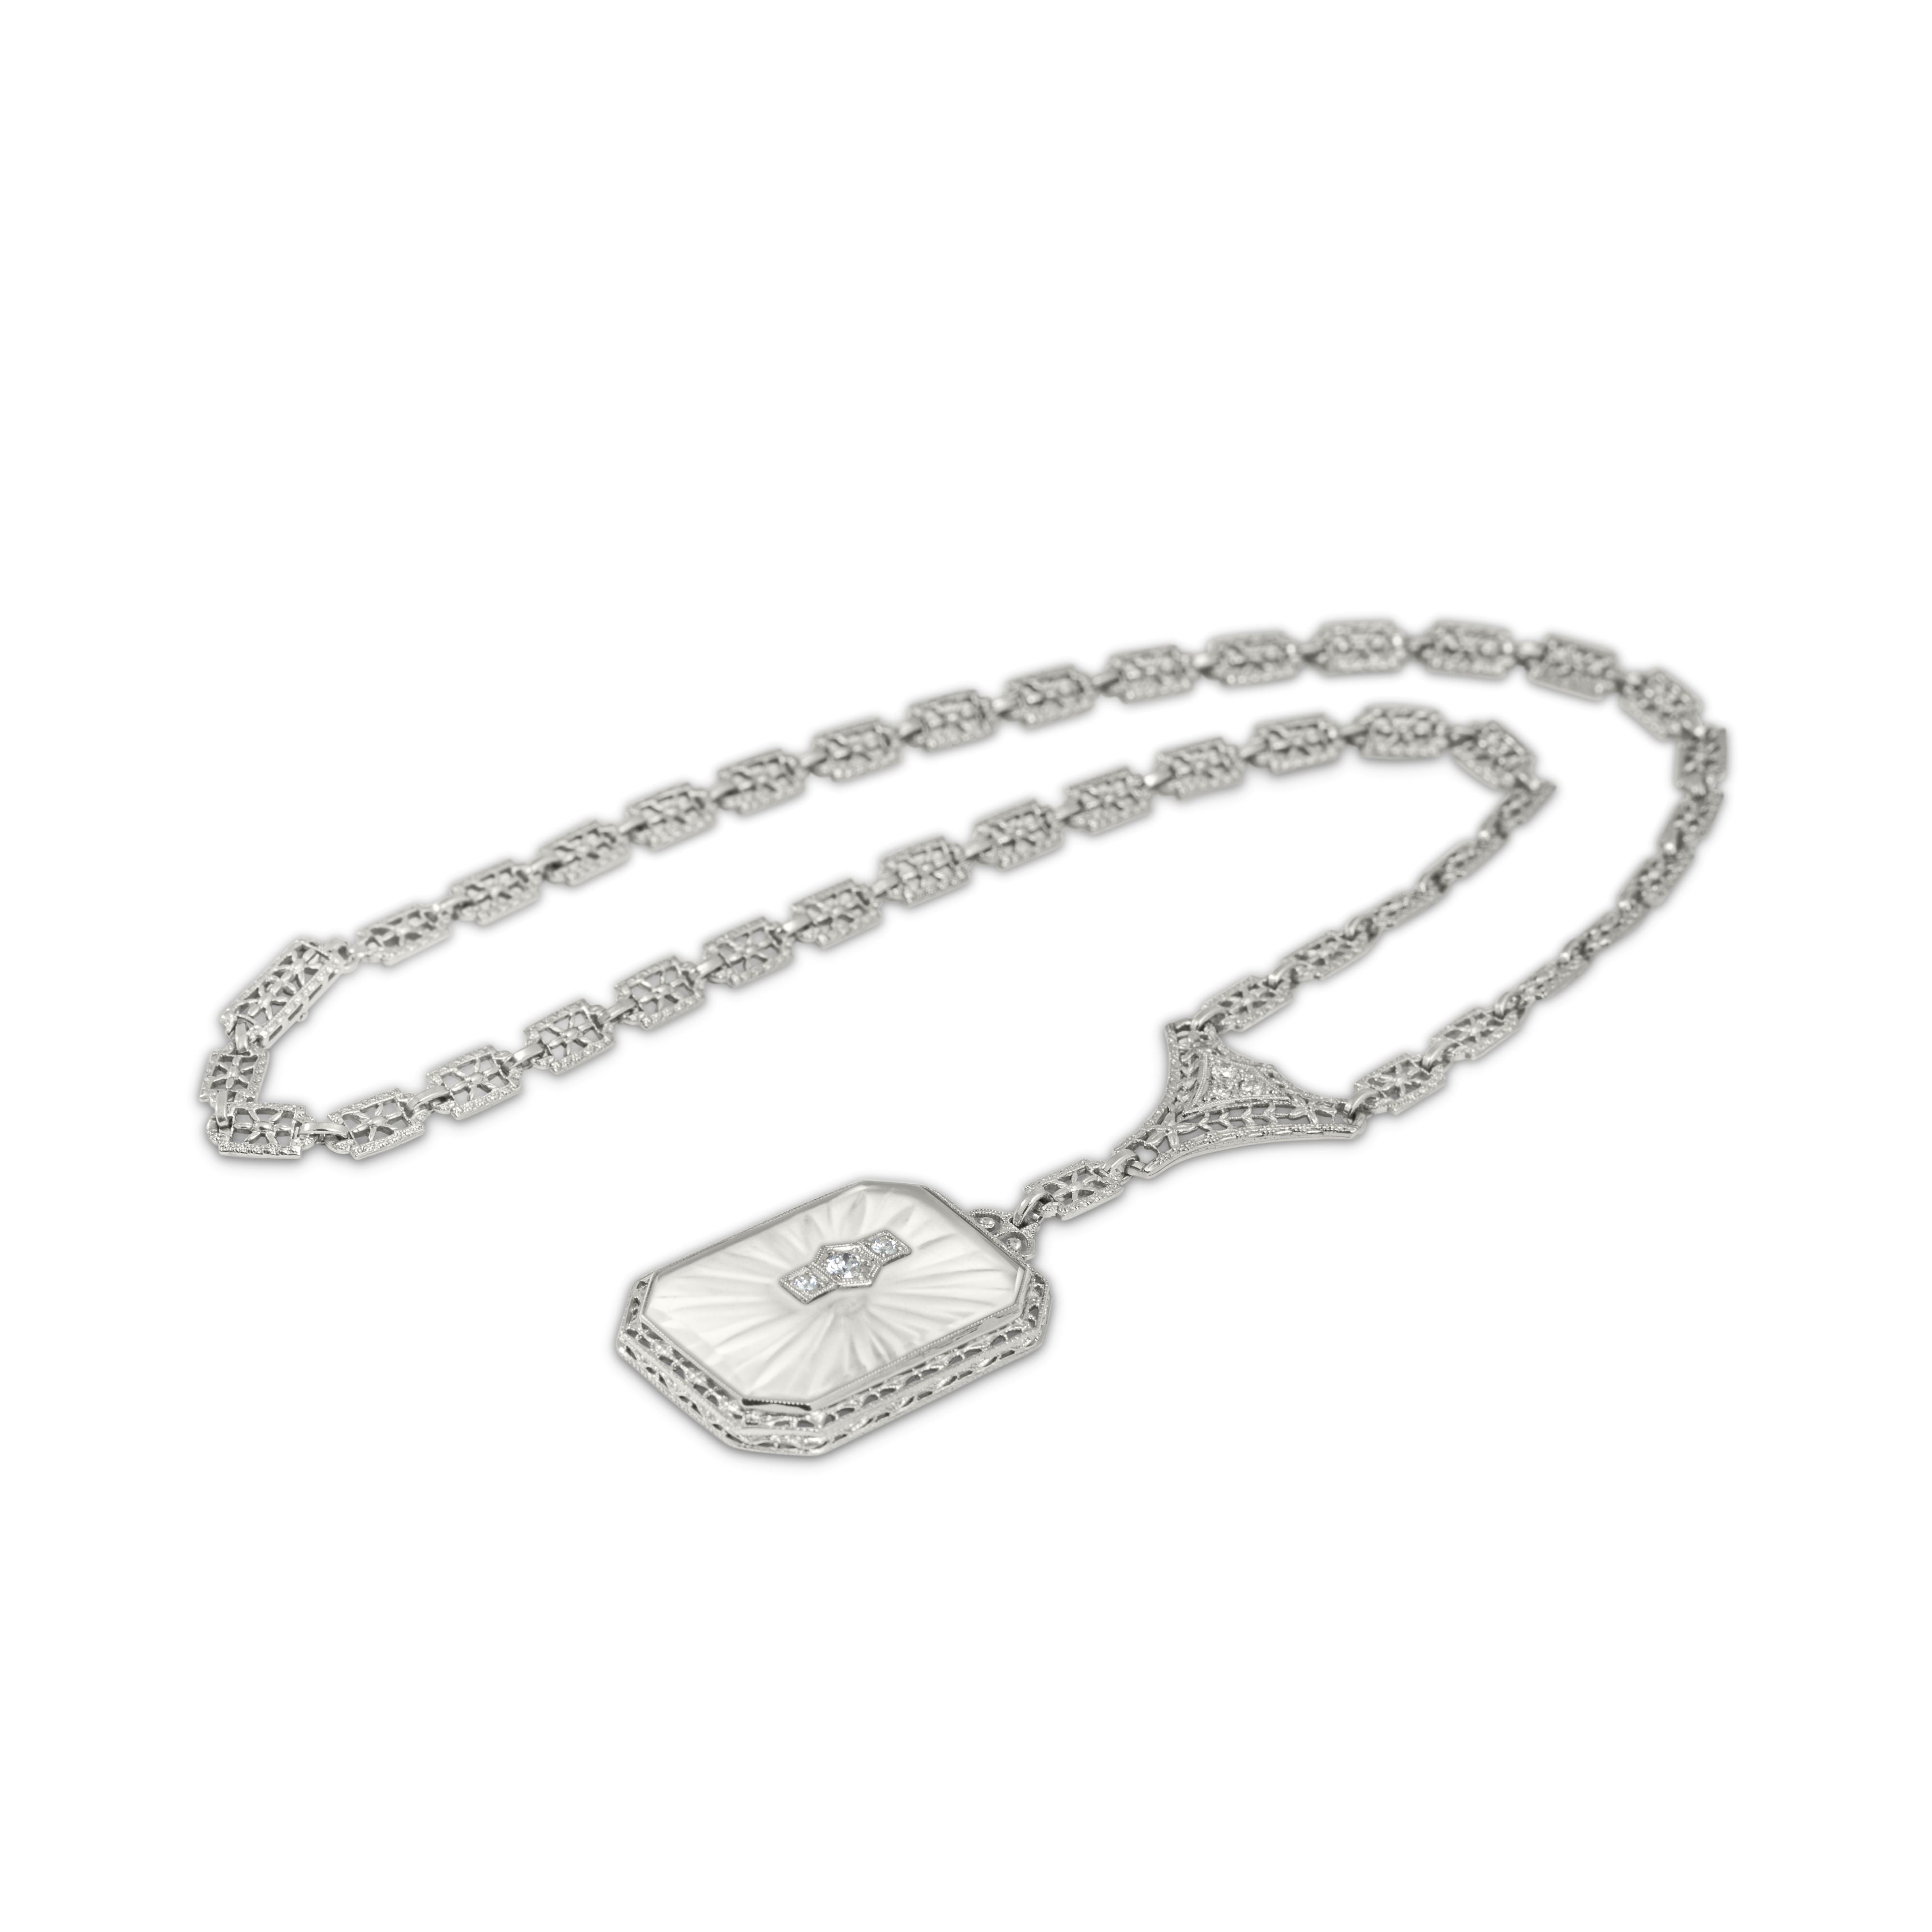 Platinum necklace with clear quartz from the Art Deco era